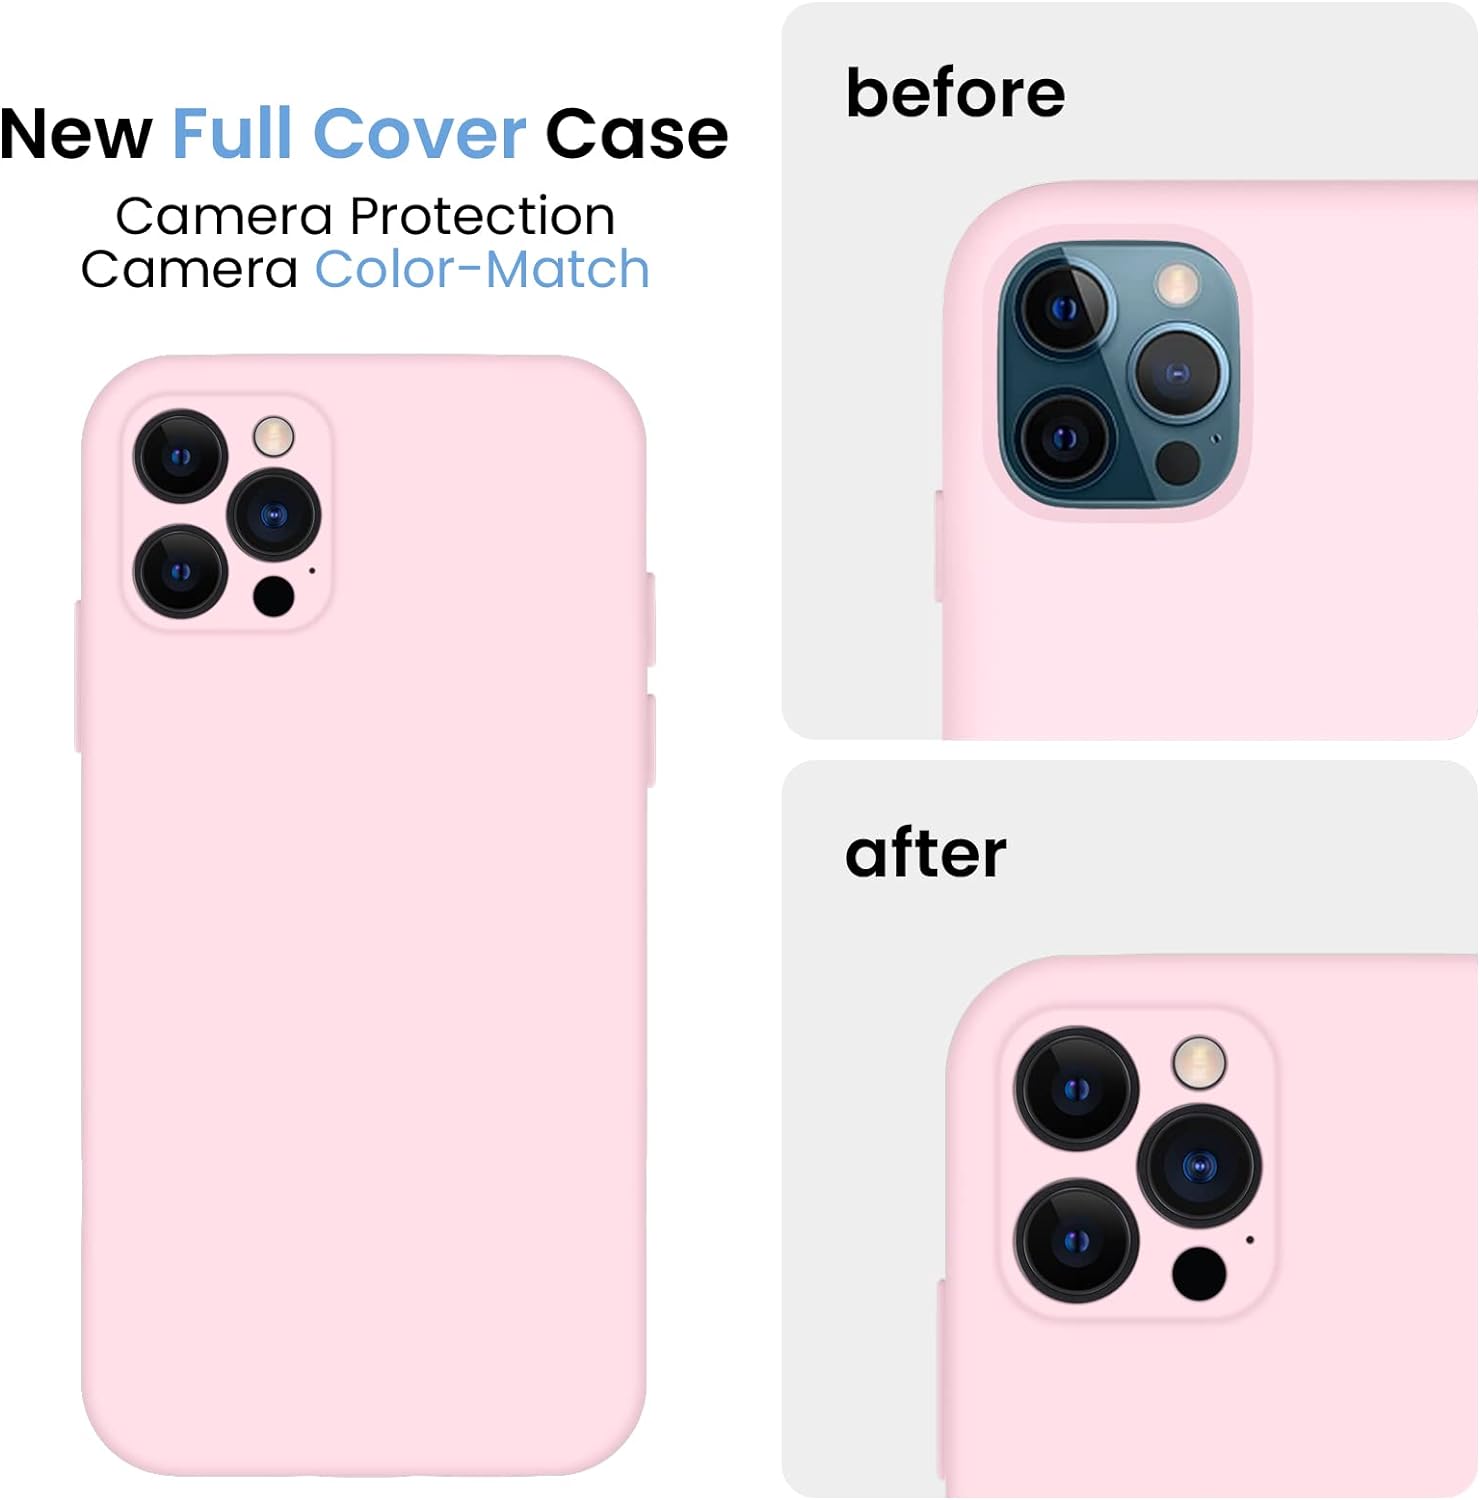 FireNova iPhone 12 Pro Max Case Review